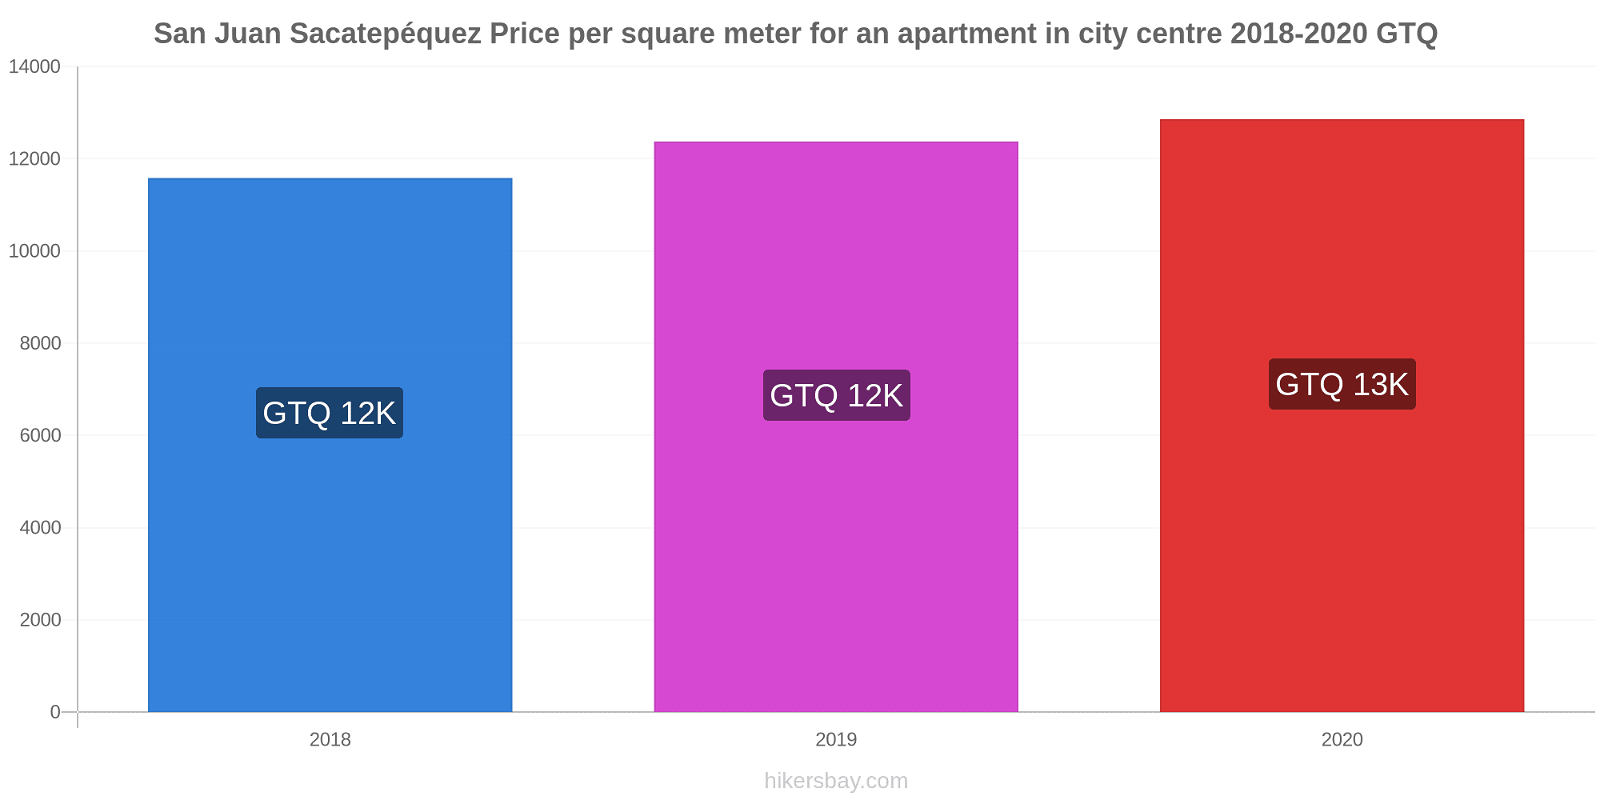 San Juan Sacatepéquez price changes Price per square meter for an apartment in city centre hikersbay.com